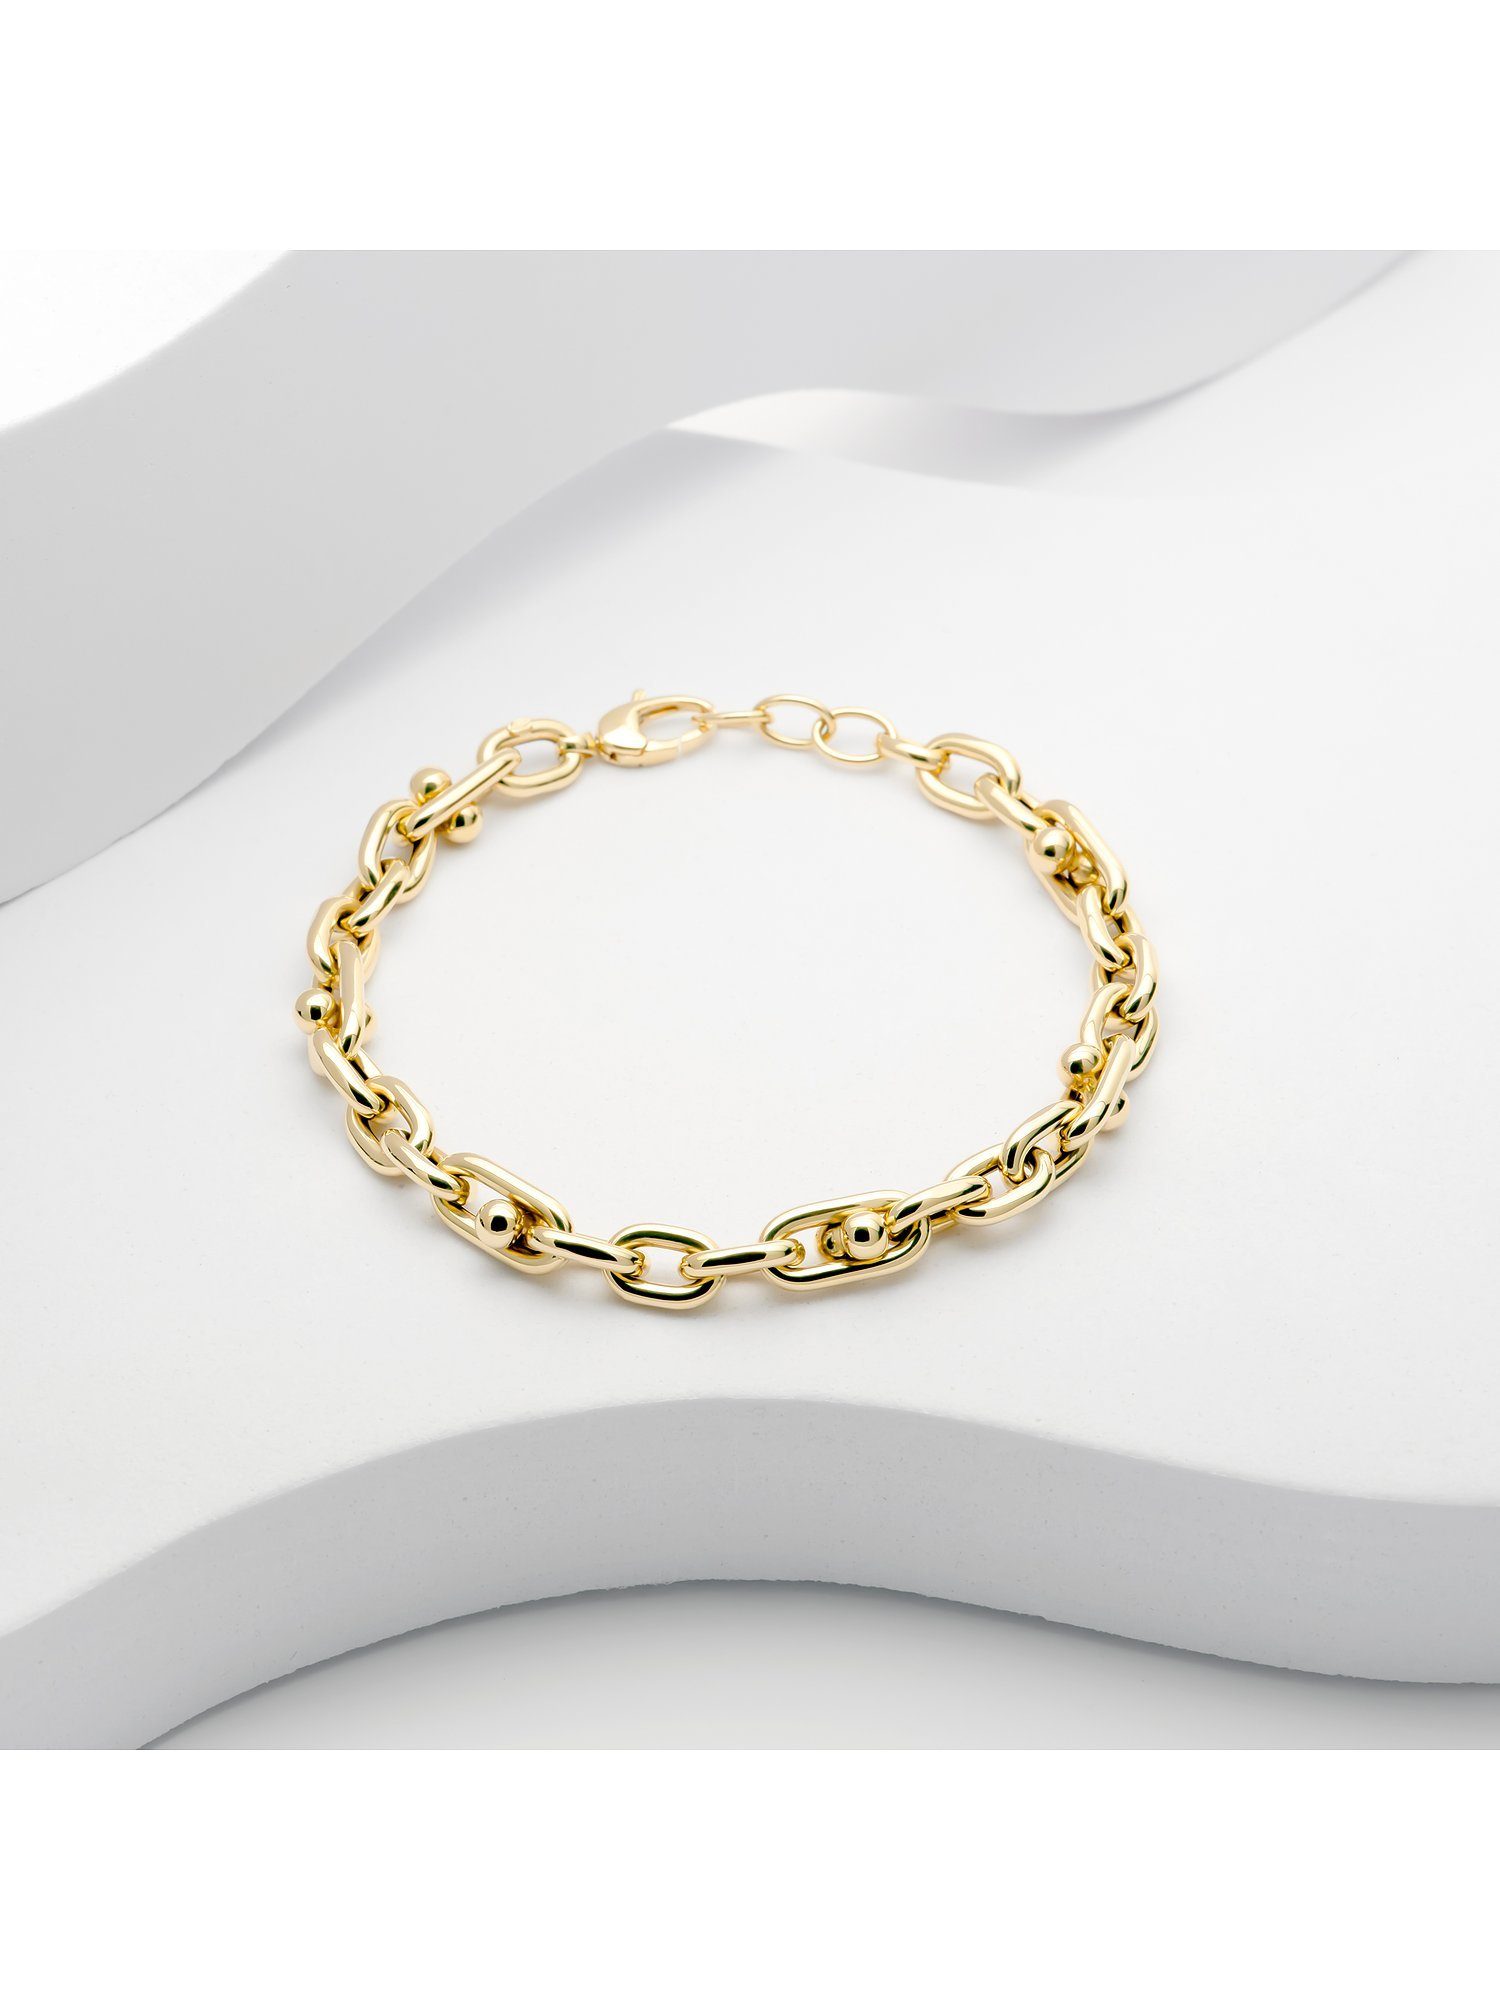 CHRIST Damen-Armband Gelbgold CHRIST Goldarmband 585er